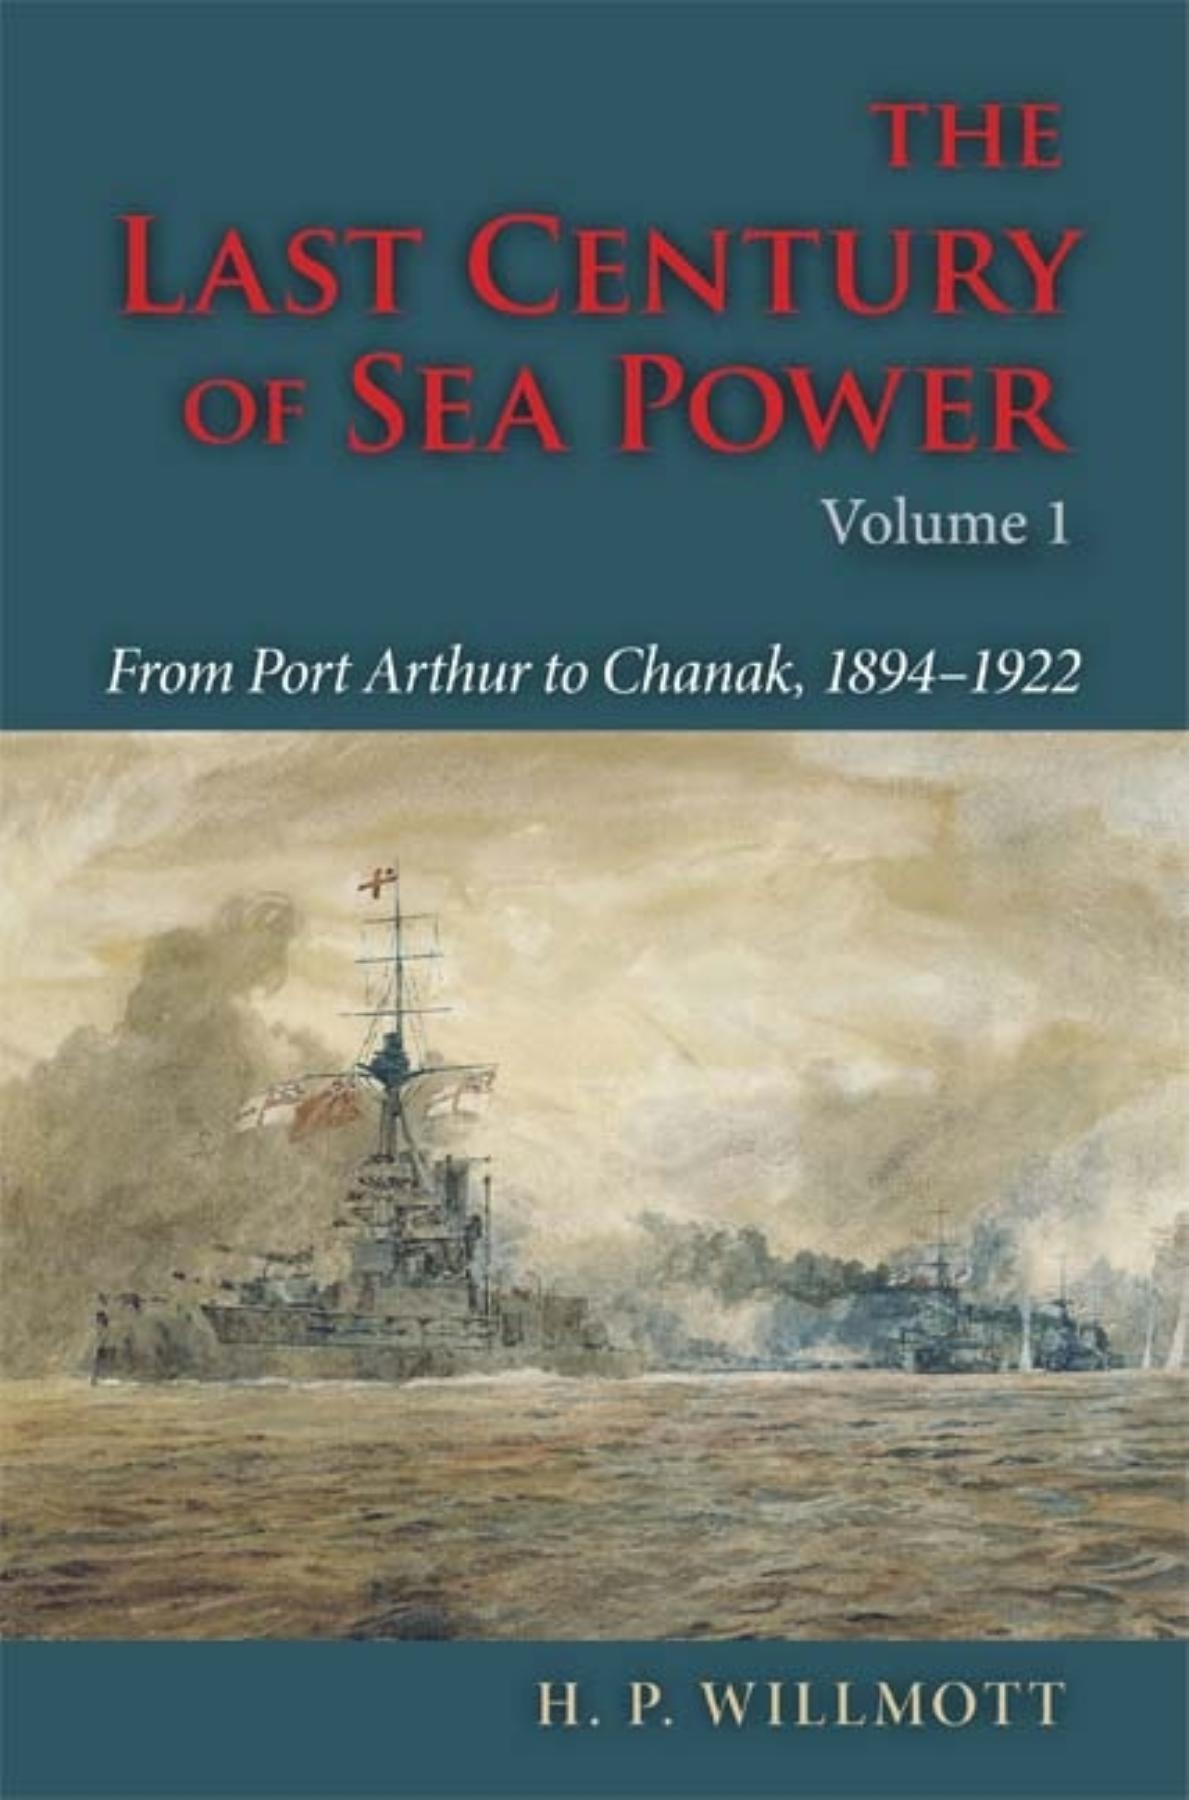 The Last Century of Sea Power, Volume 1: From Port Arthur to Chanak, 1894-1922 - Willmott, H. P.